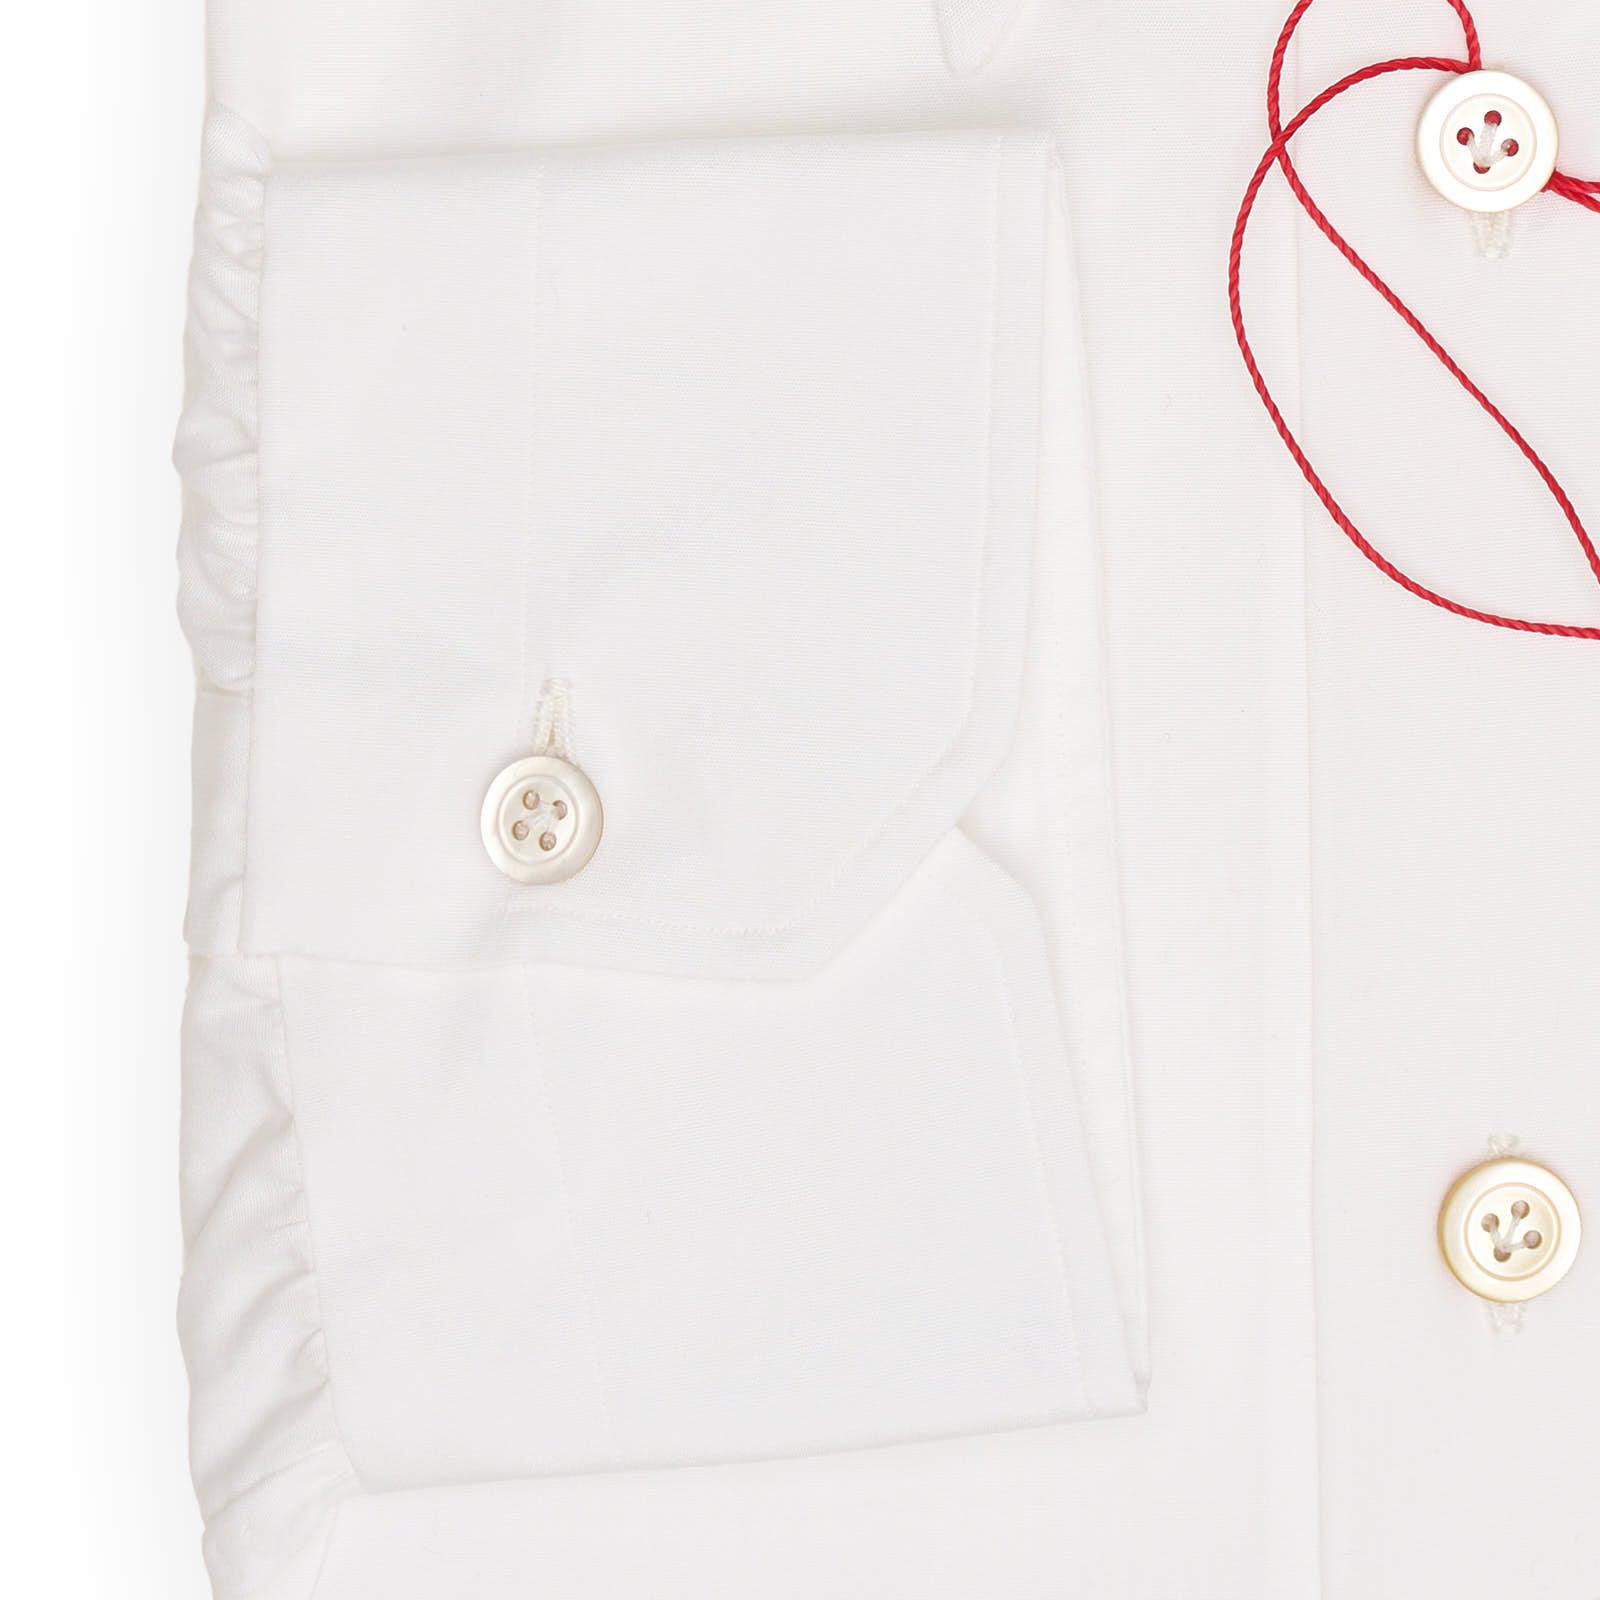 KITON Napoli Handmade White Cotton Button-Down Dress Shirt EU 45 NEW US 18